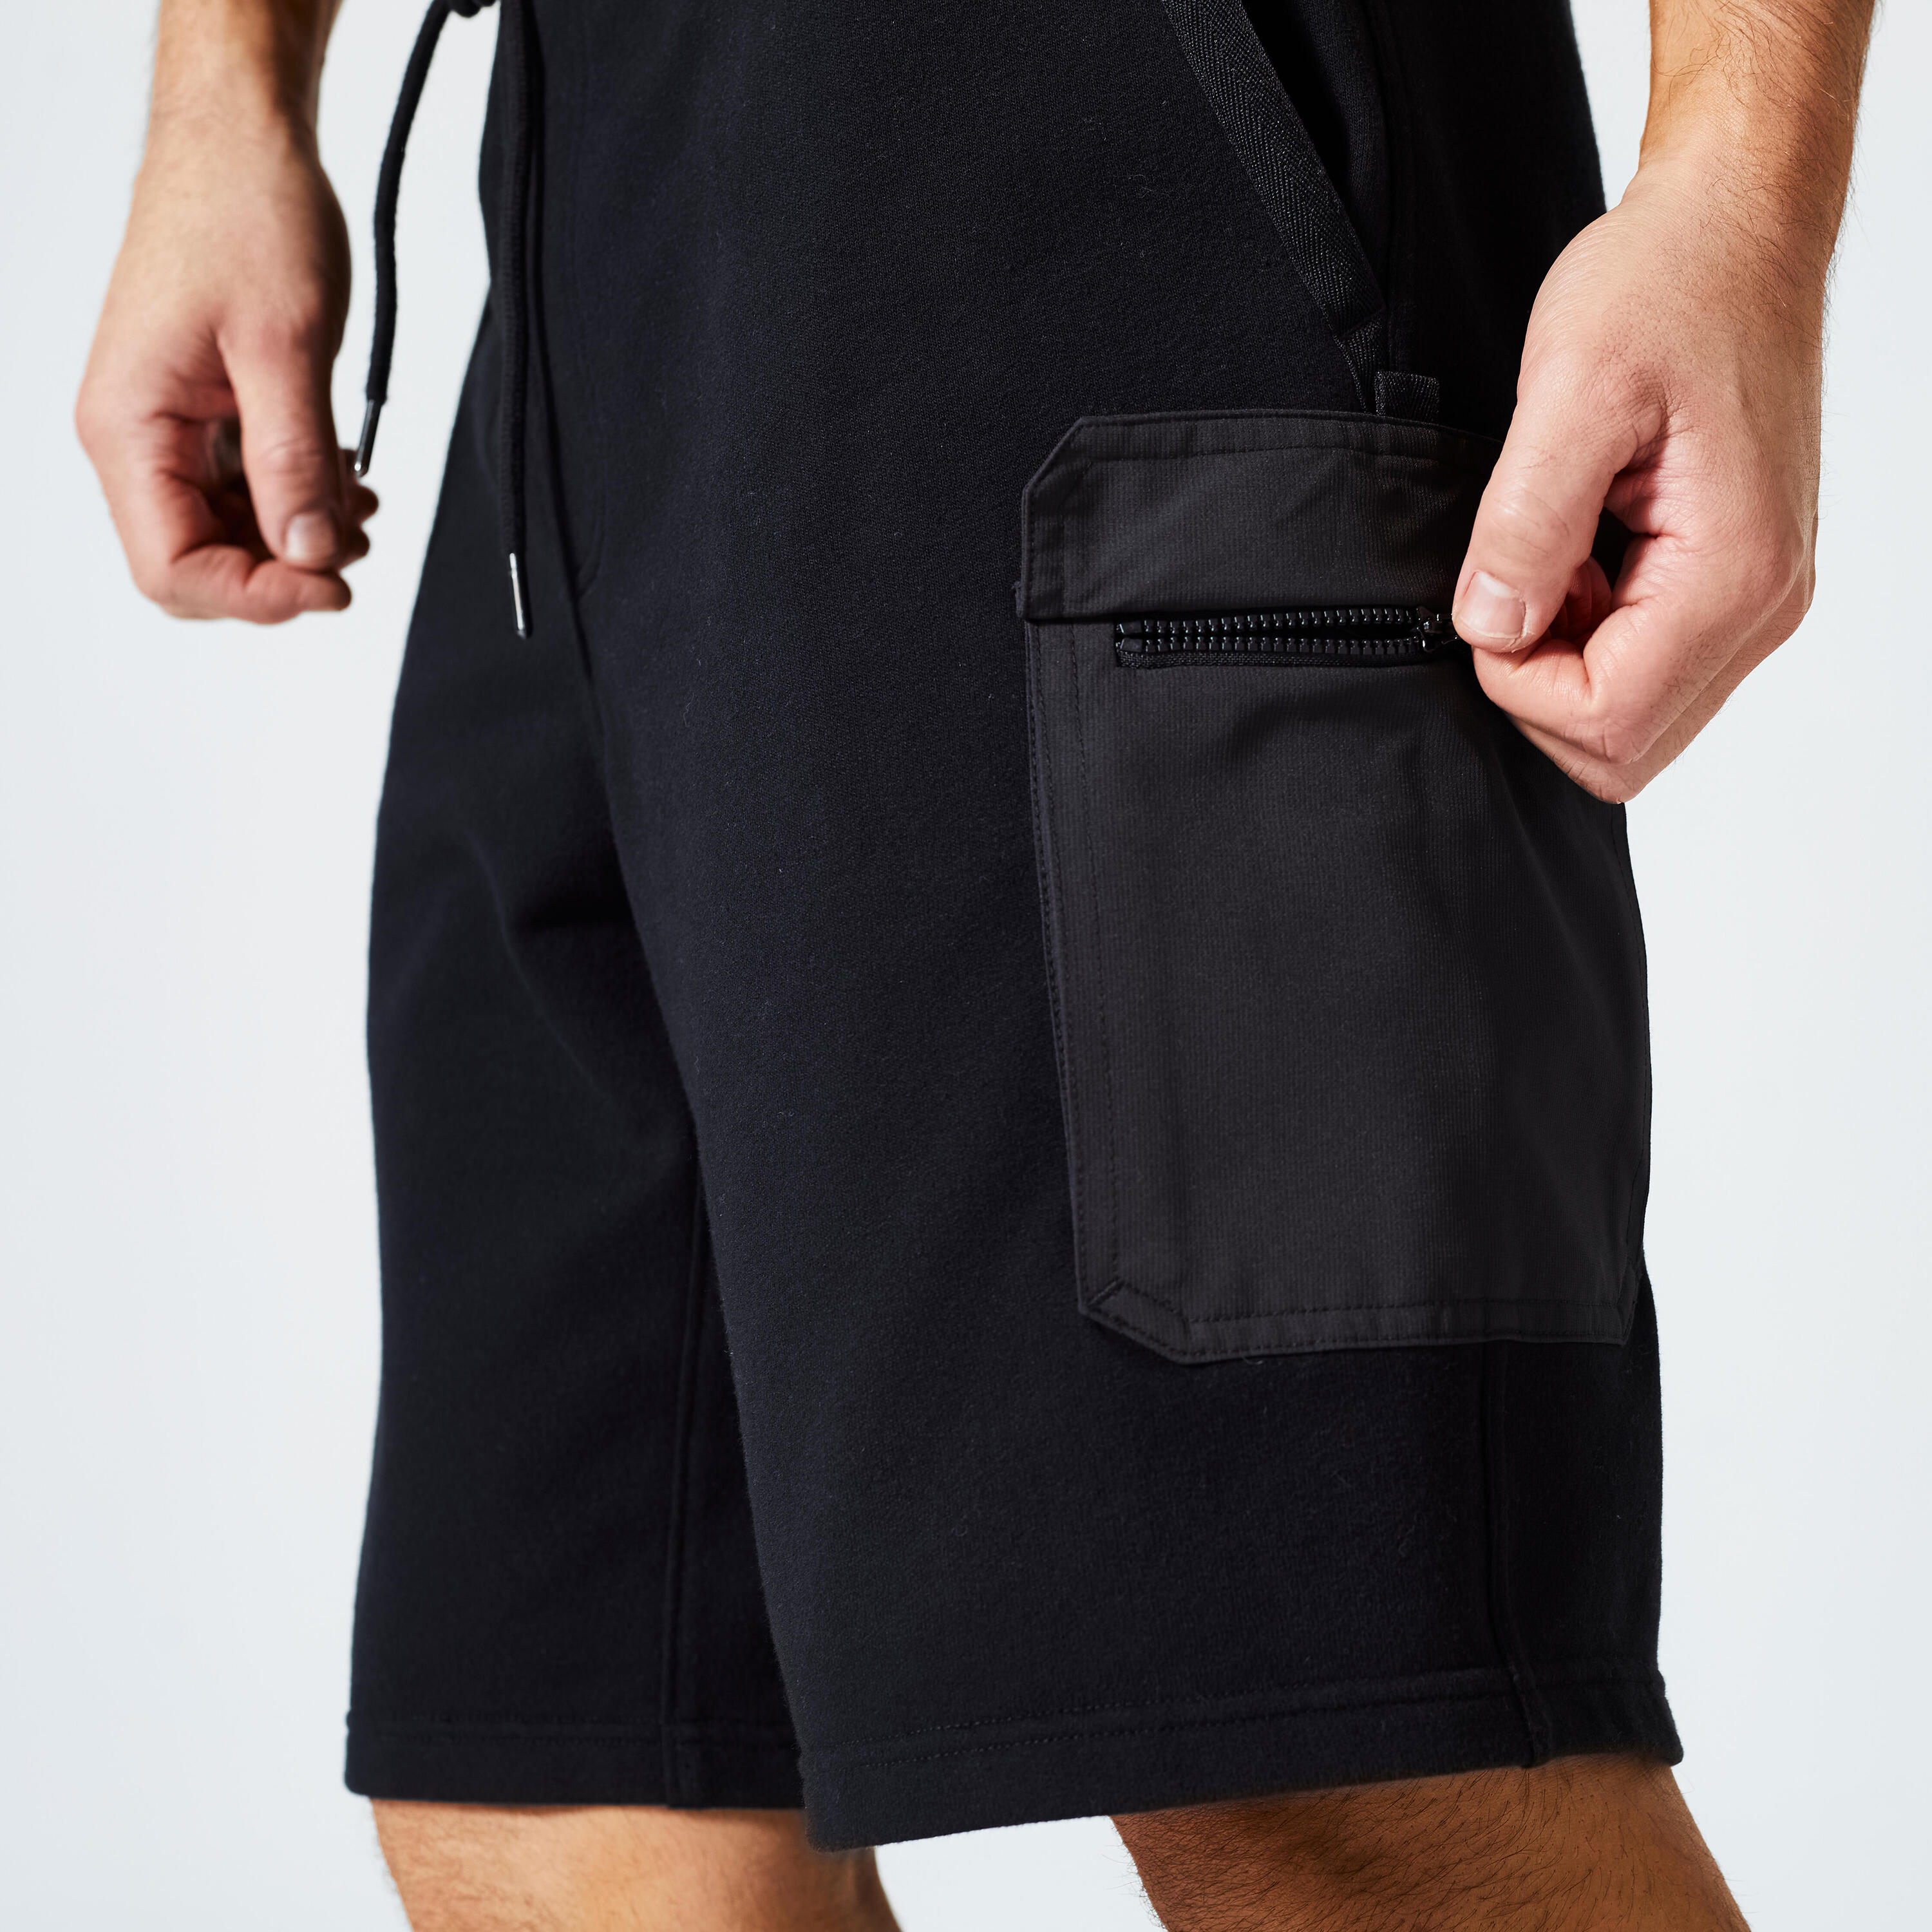 Men's Cargo Fitness Shorts 520 - Black 4/5